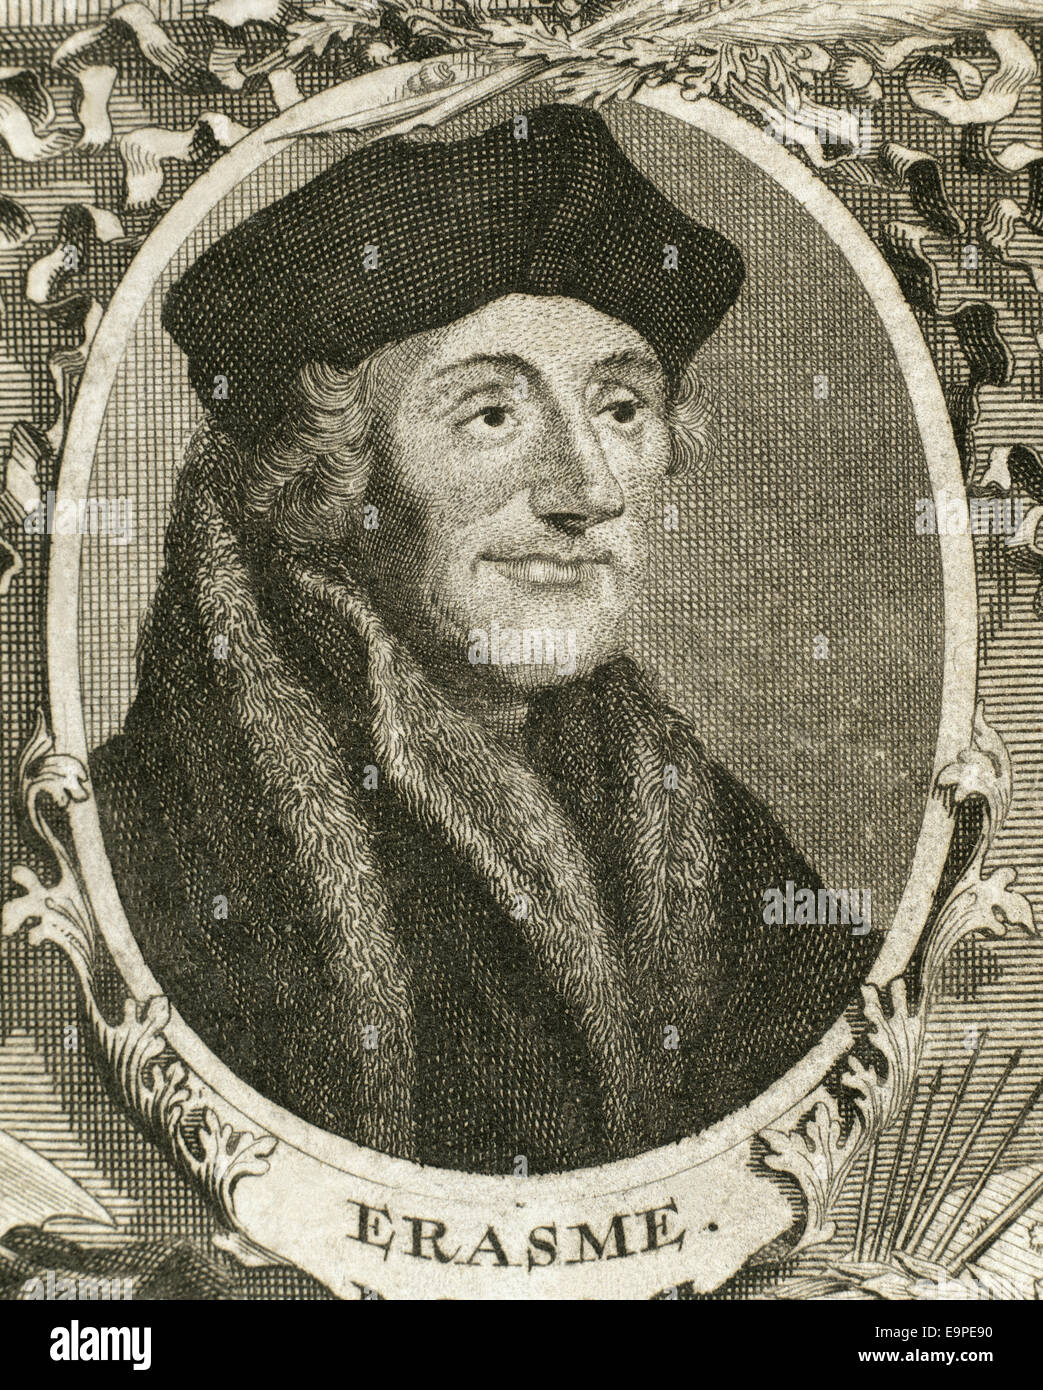 Erasmus of Rotterdam (1466-1536). Dutch humanist. Portrait. Engraving, 1713. Stock Photo